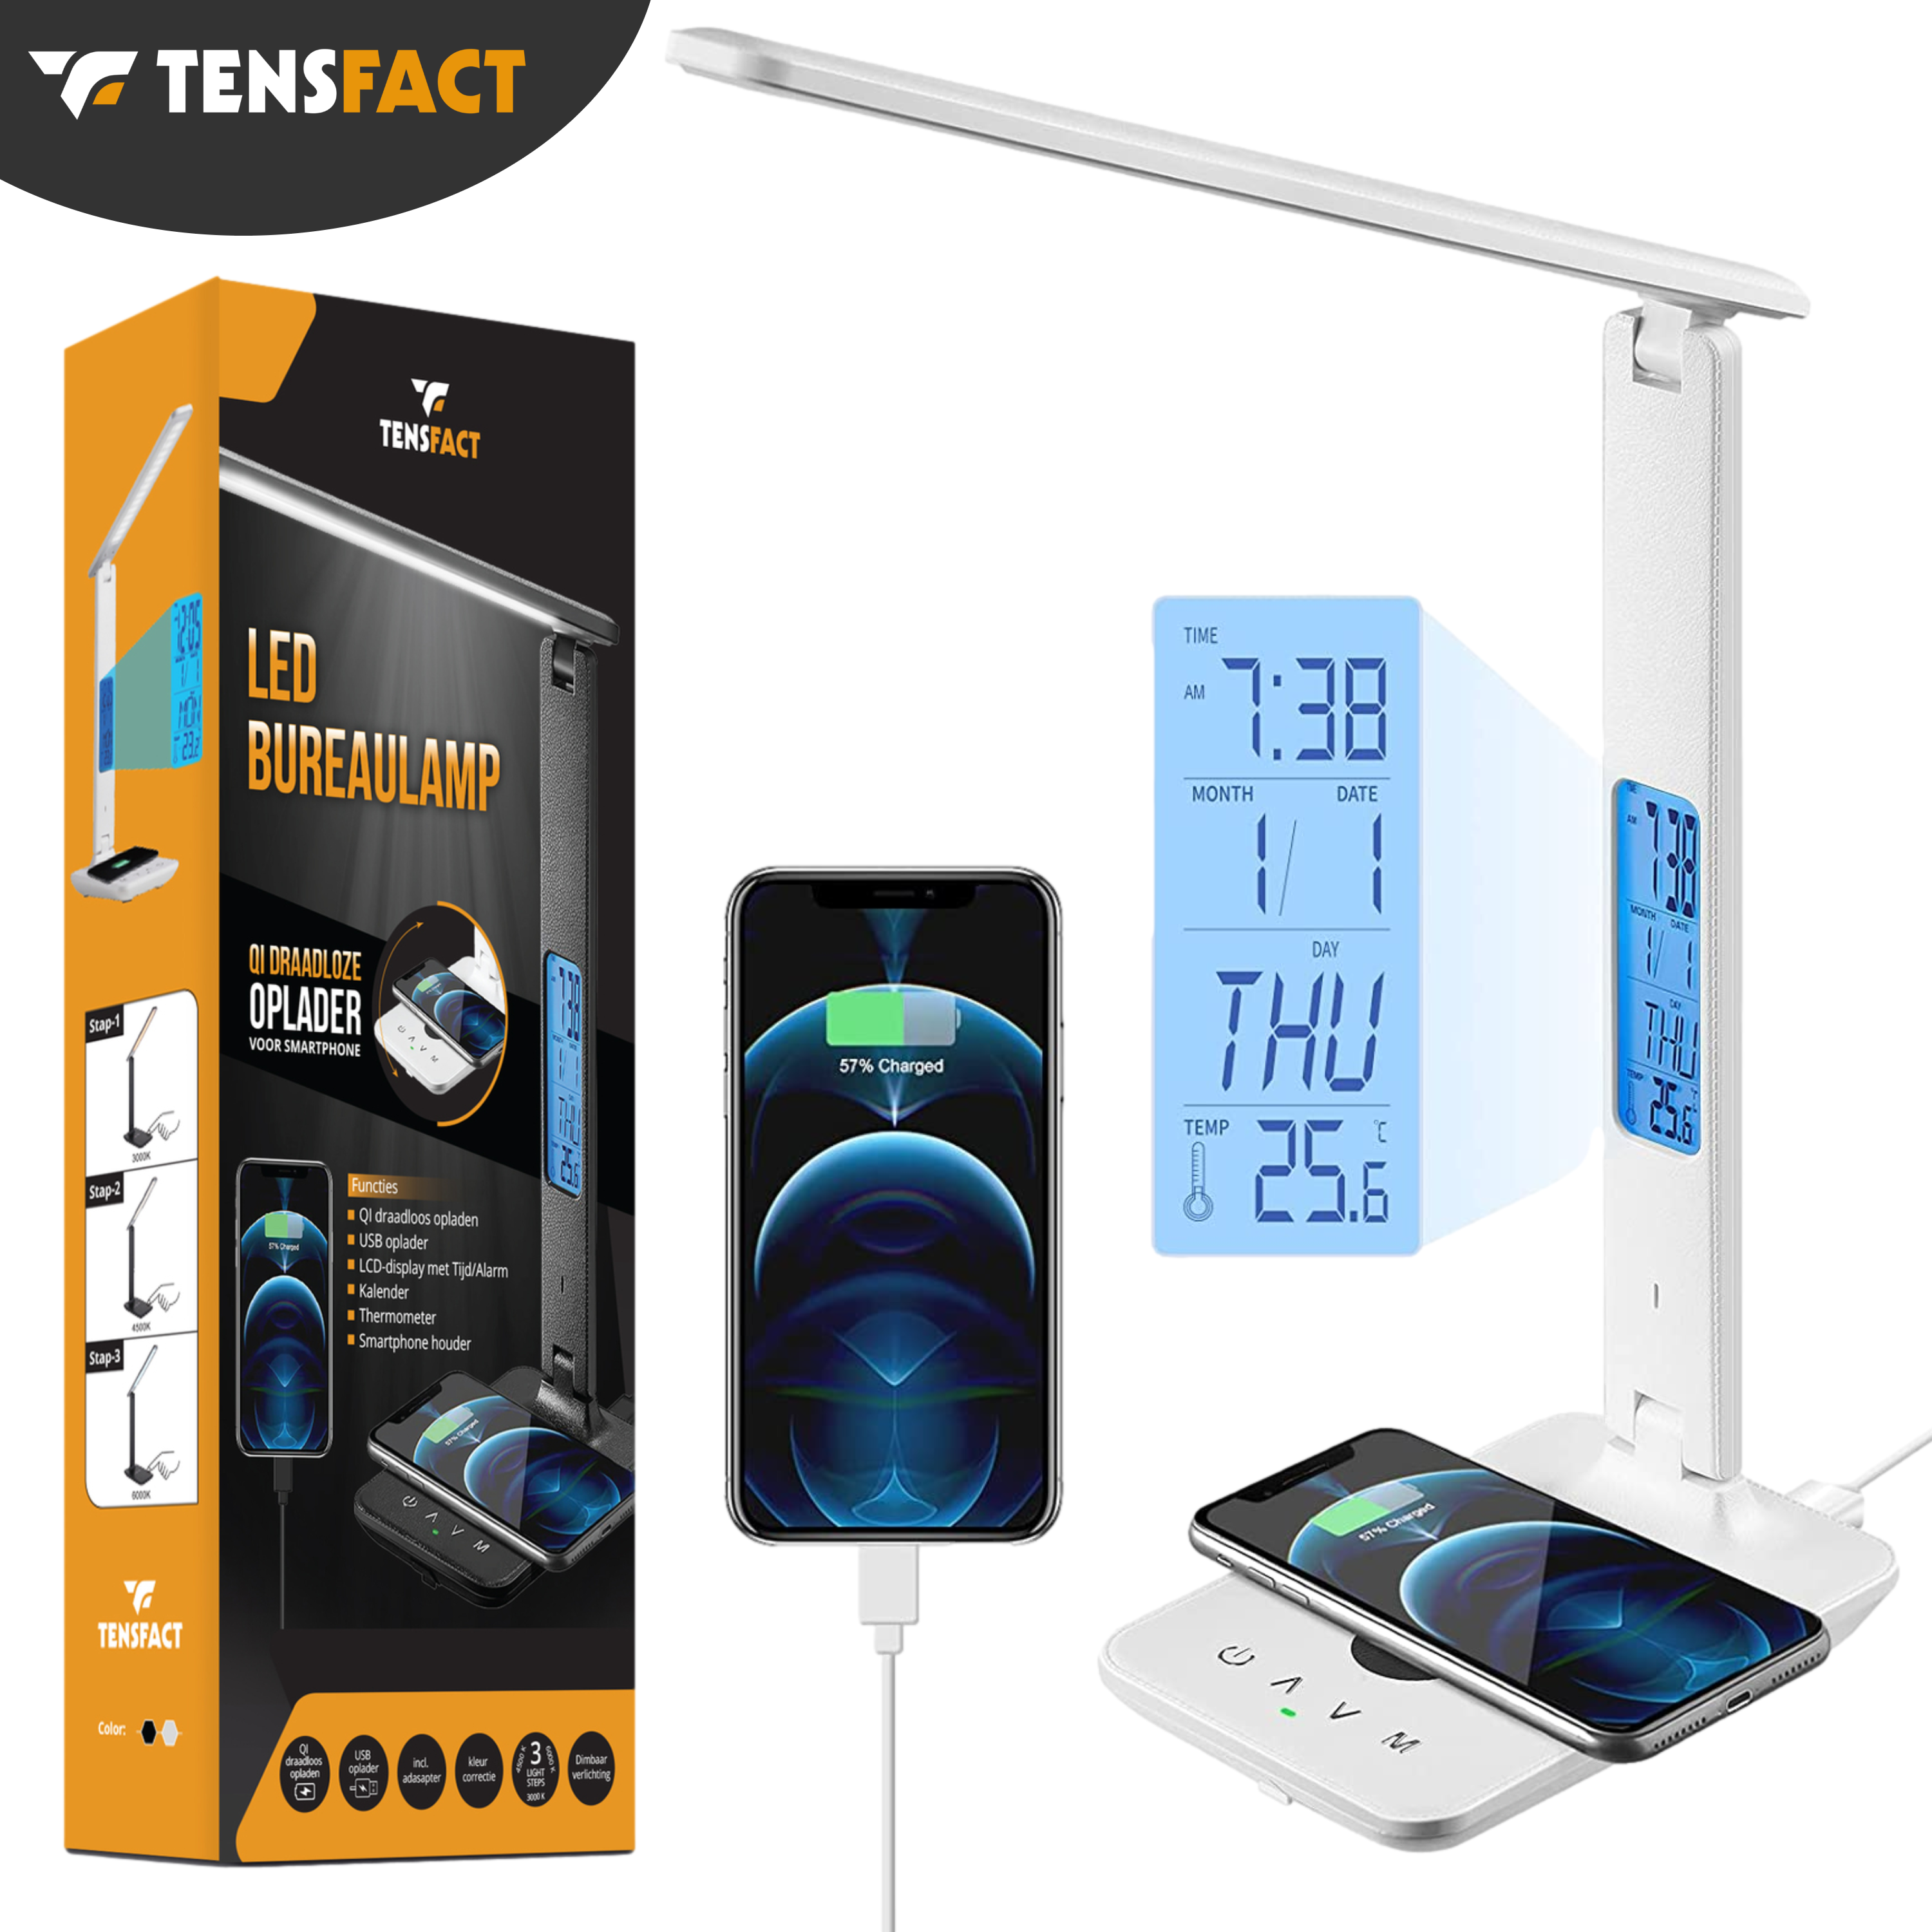 Led bureaulamp met draadloos oplader Tensfact® Wit